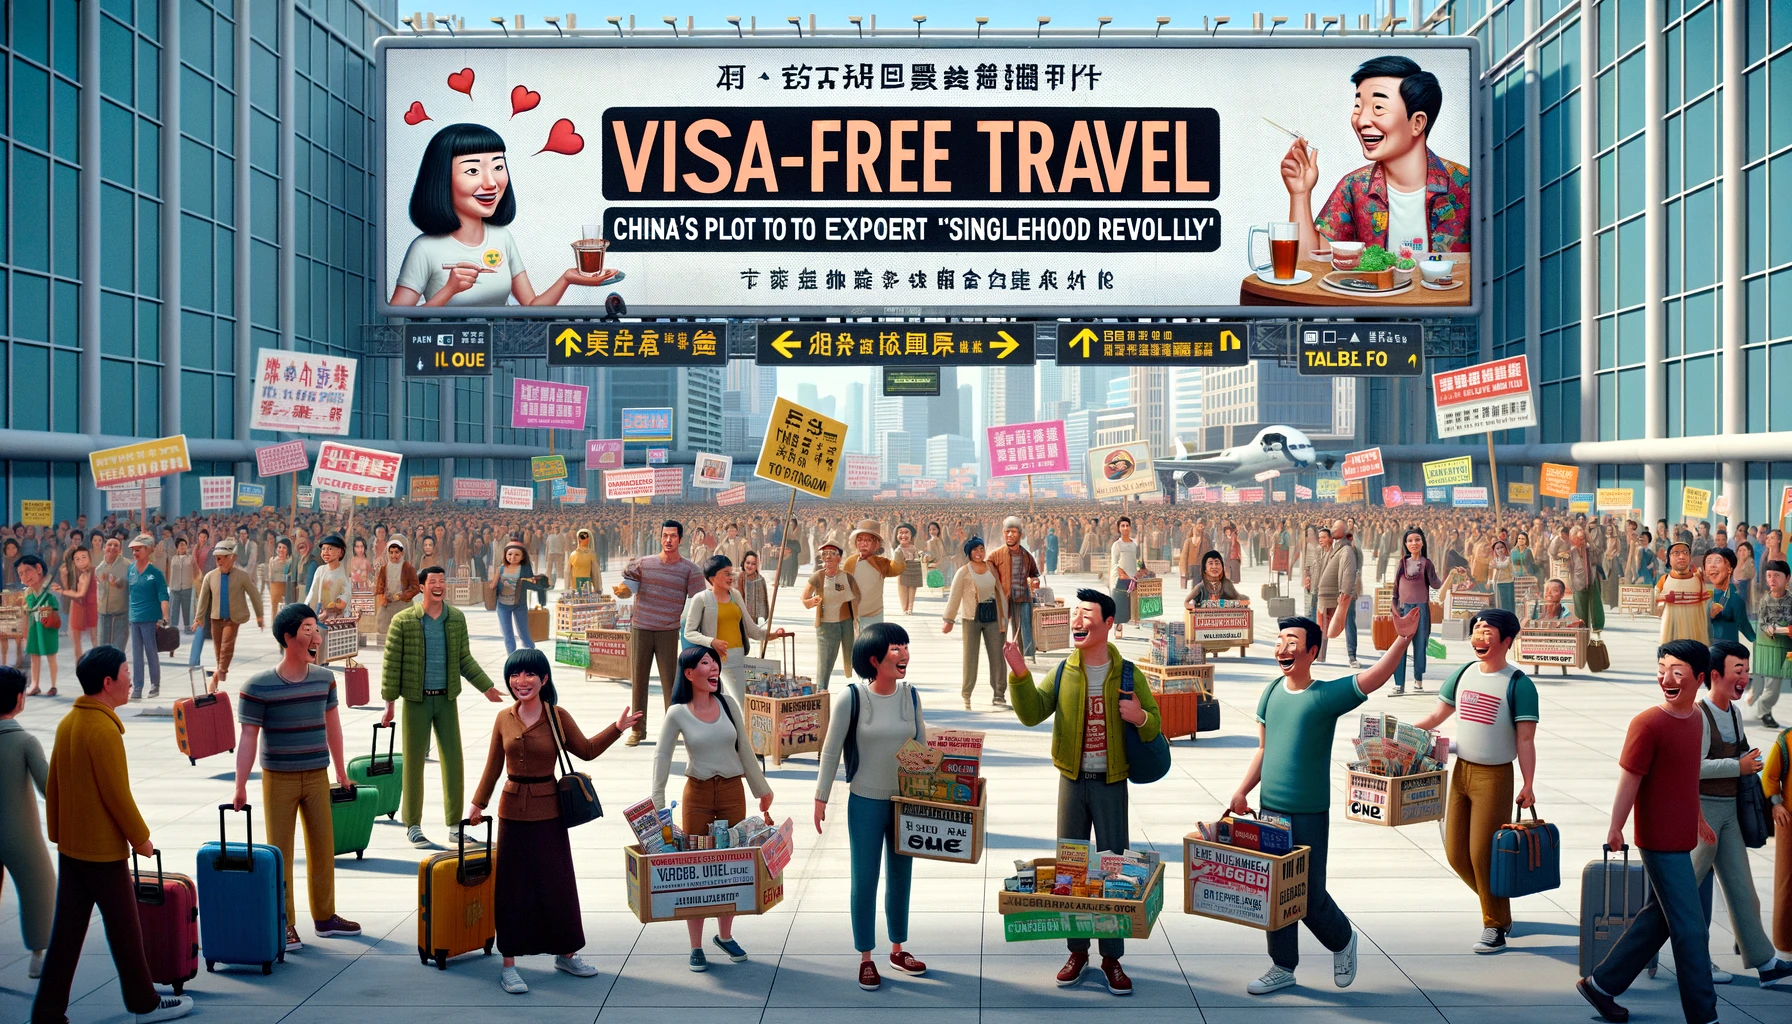 visa-free-travel-for-chinese-singles-csdn